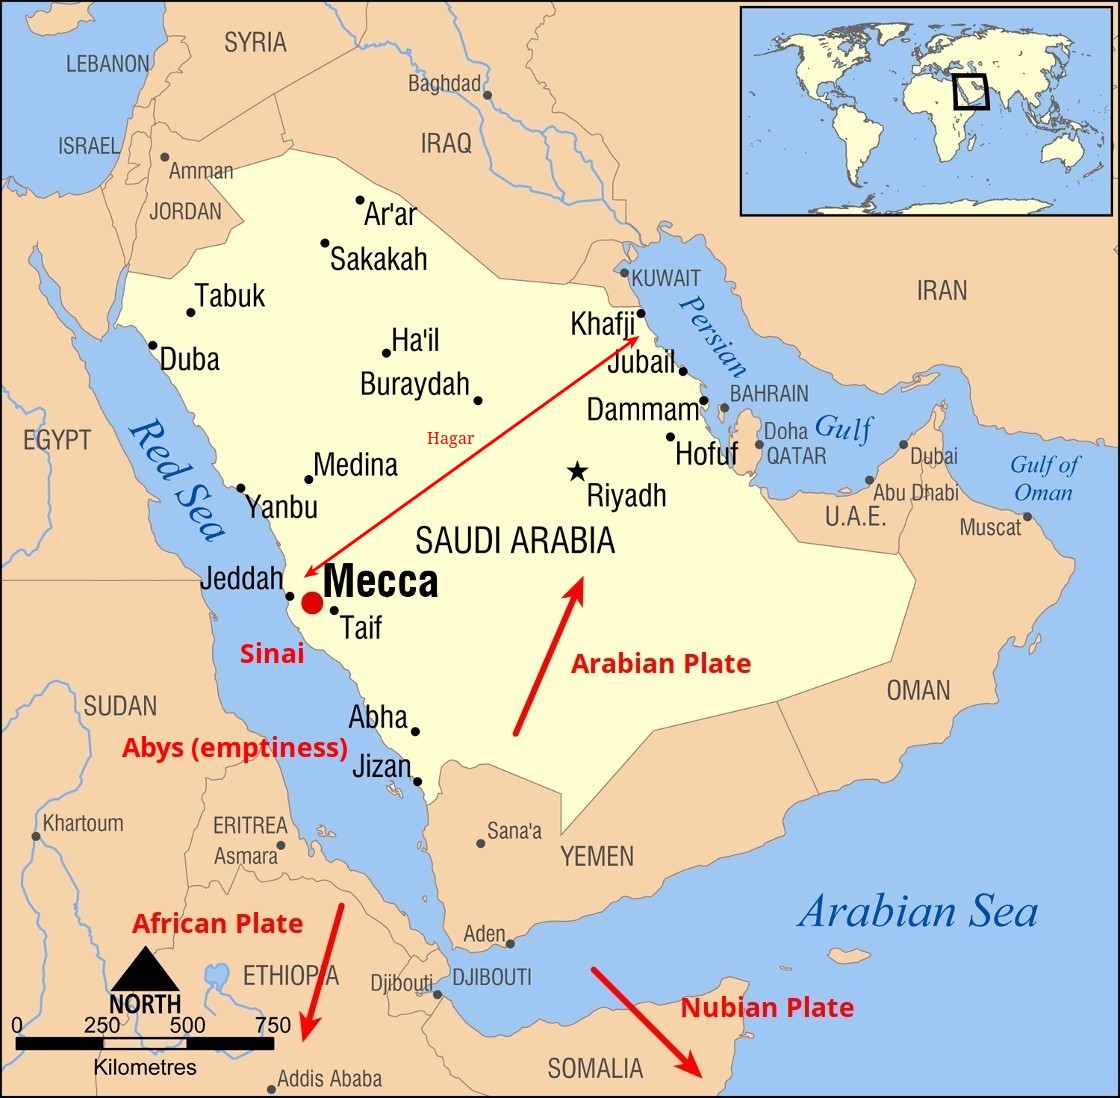 Mecca Arabia Sinai